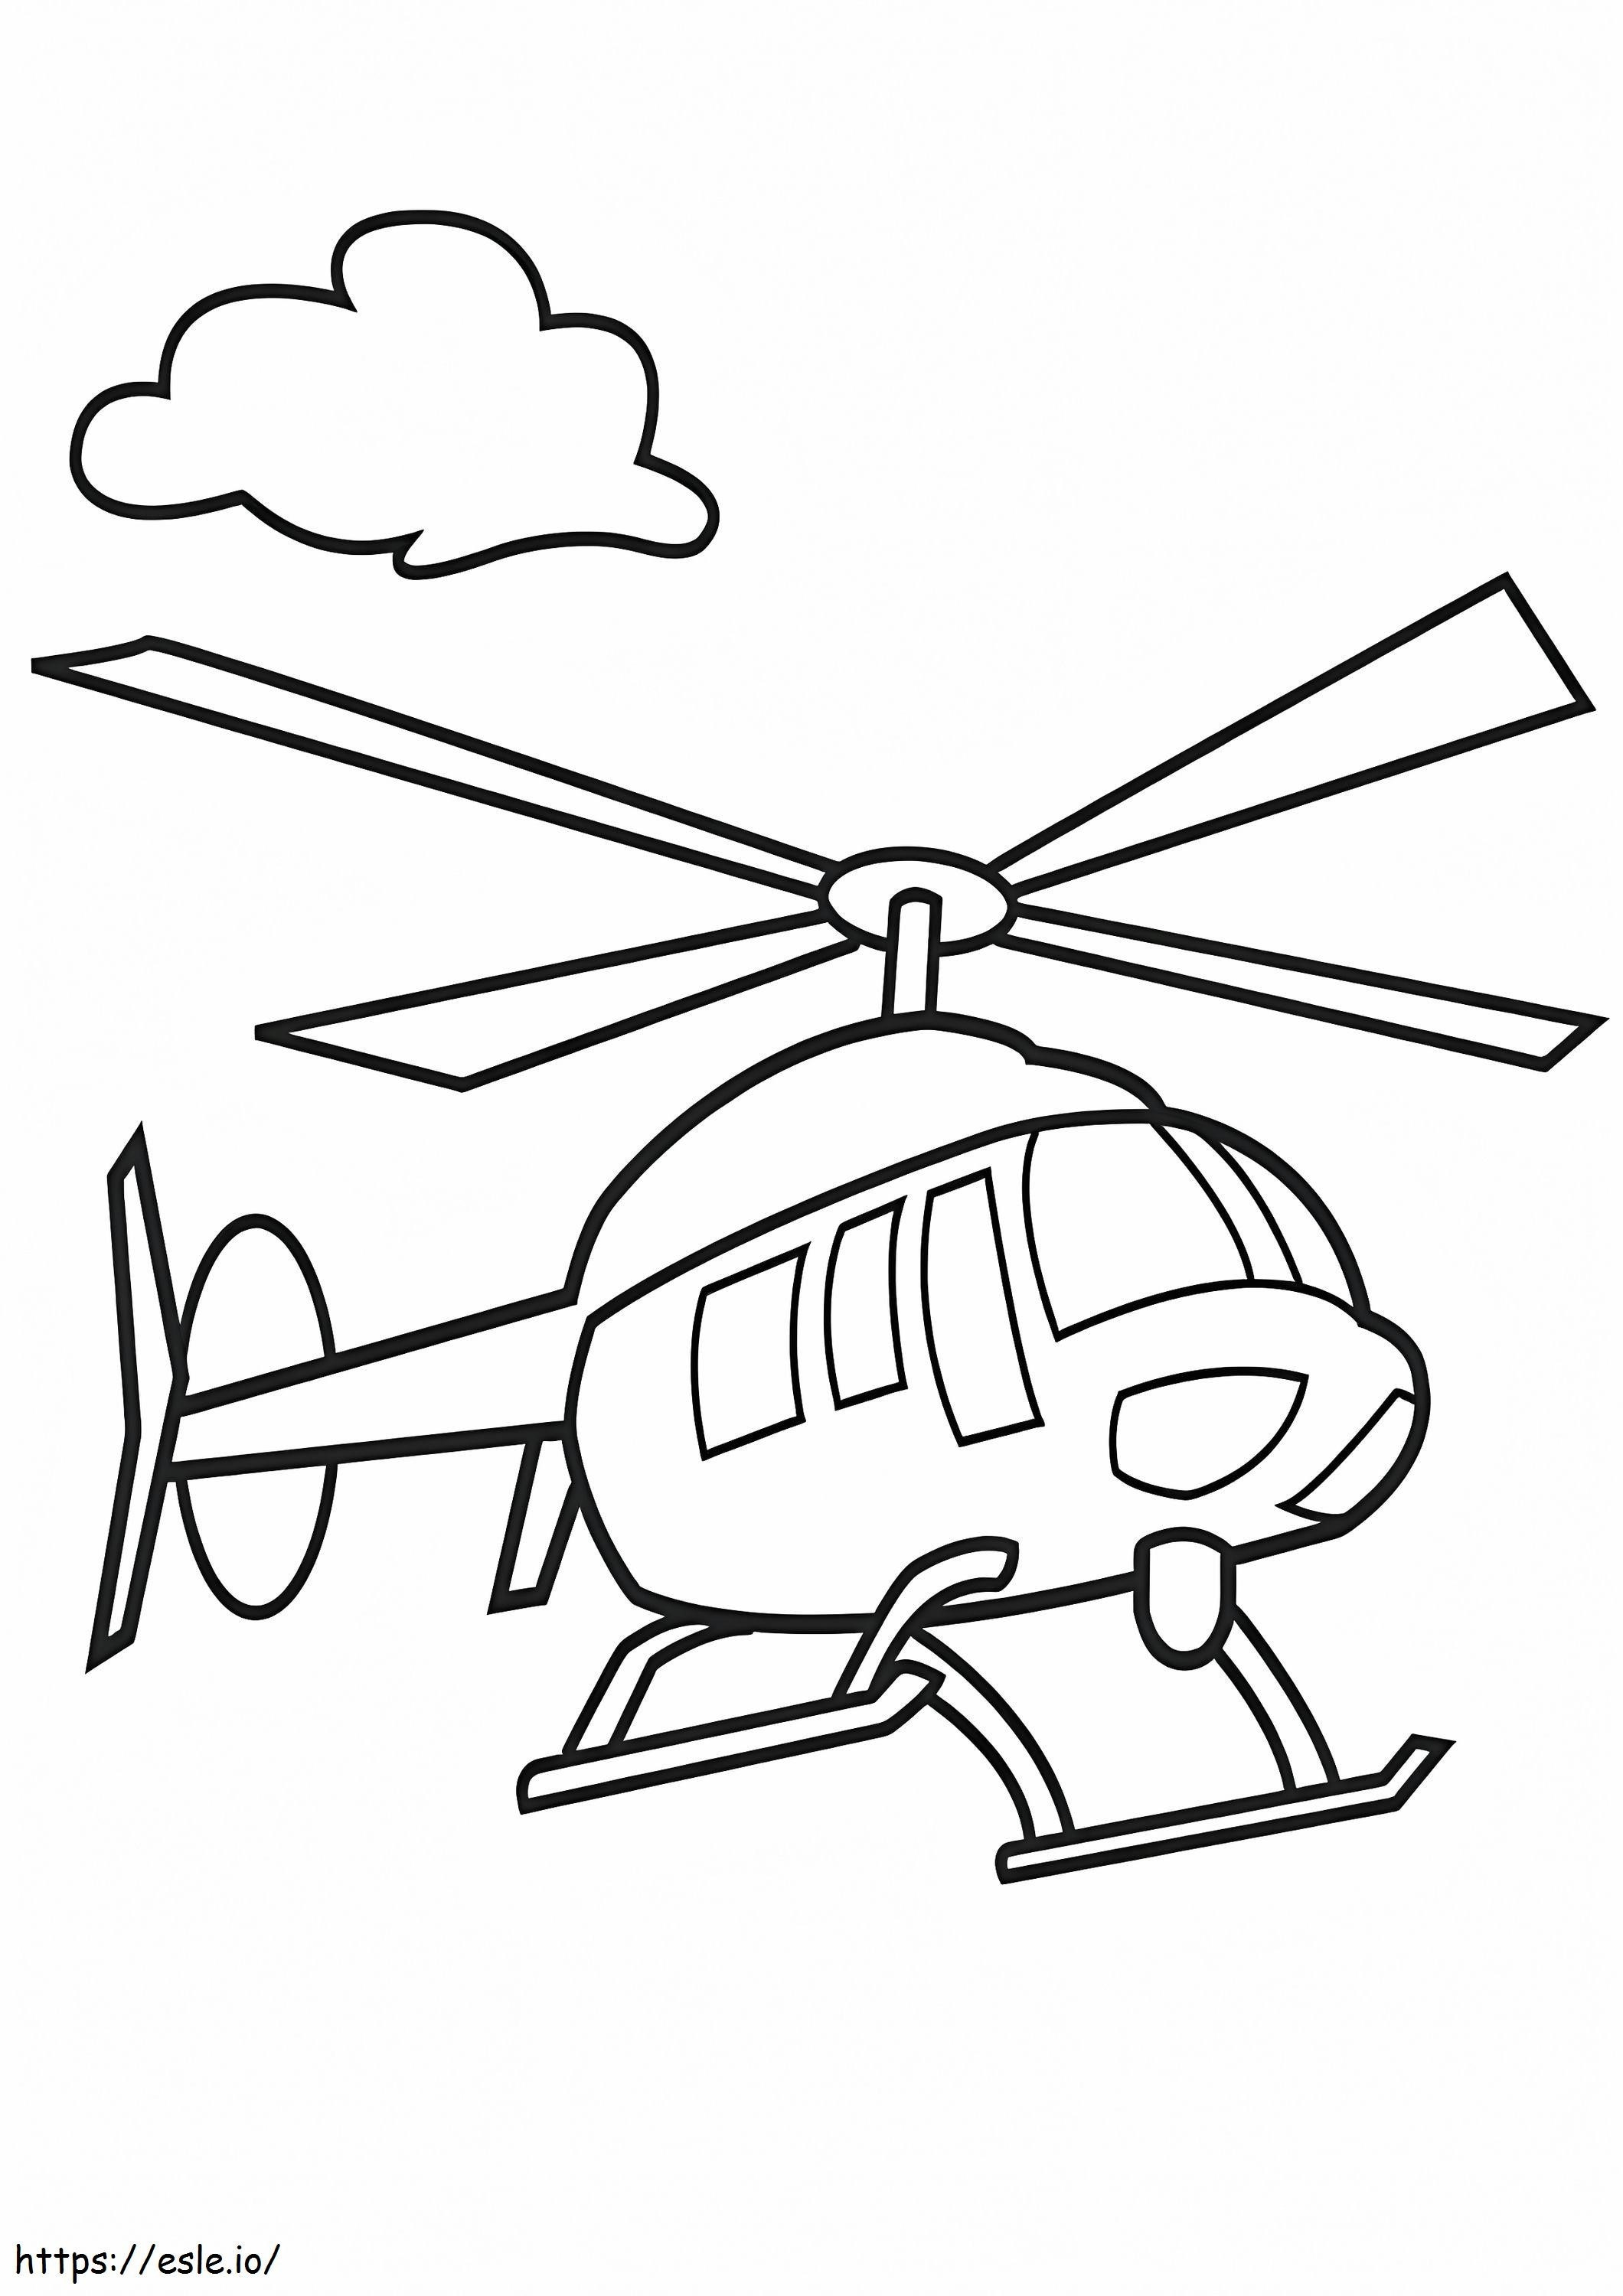 Helicóptero 2 para colorear